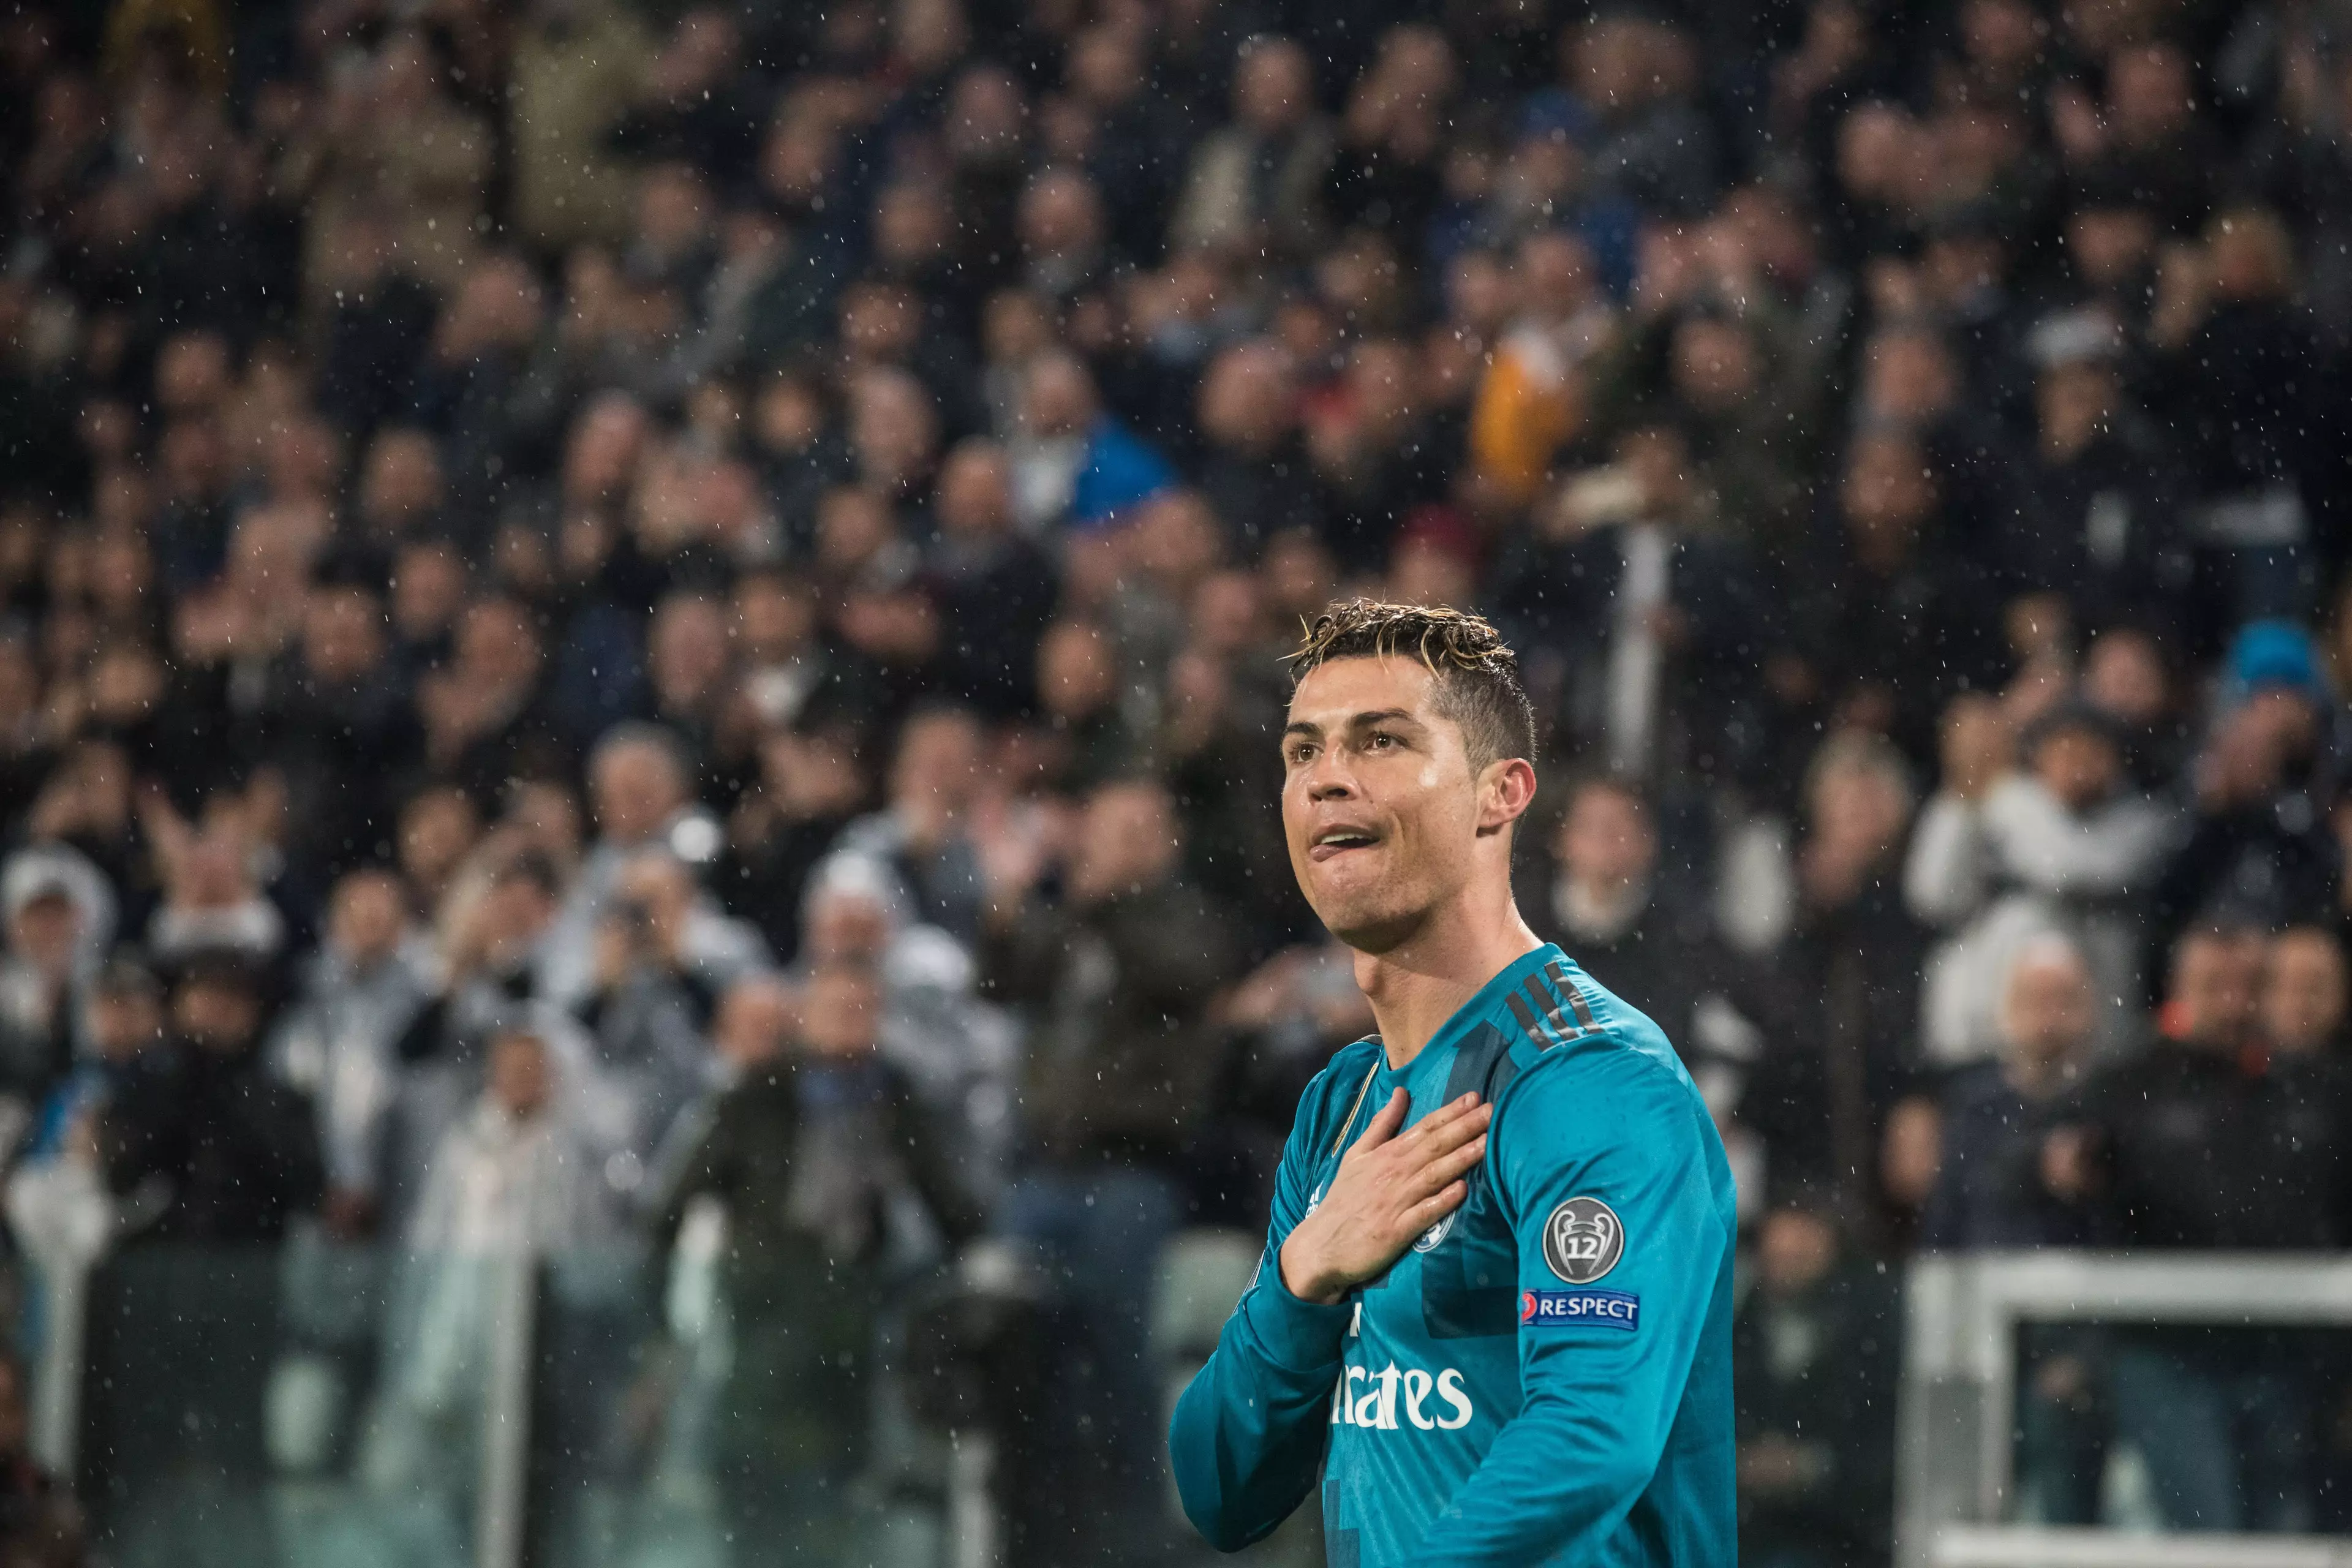 Ronaldo gestures to Juventus fans after scoring a goal. Image: PA